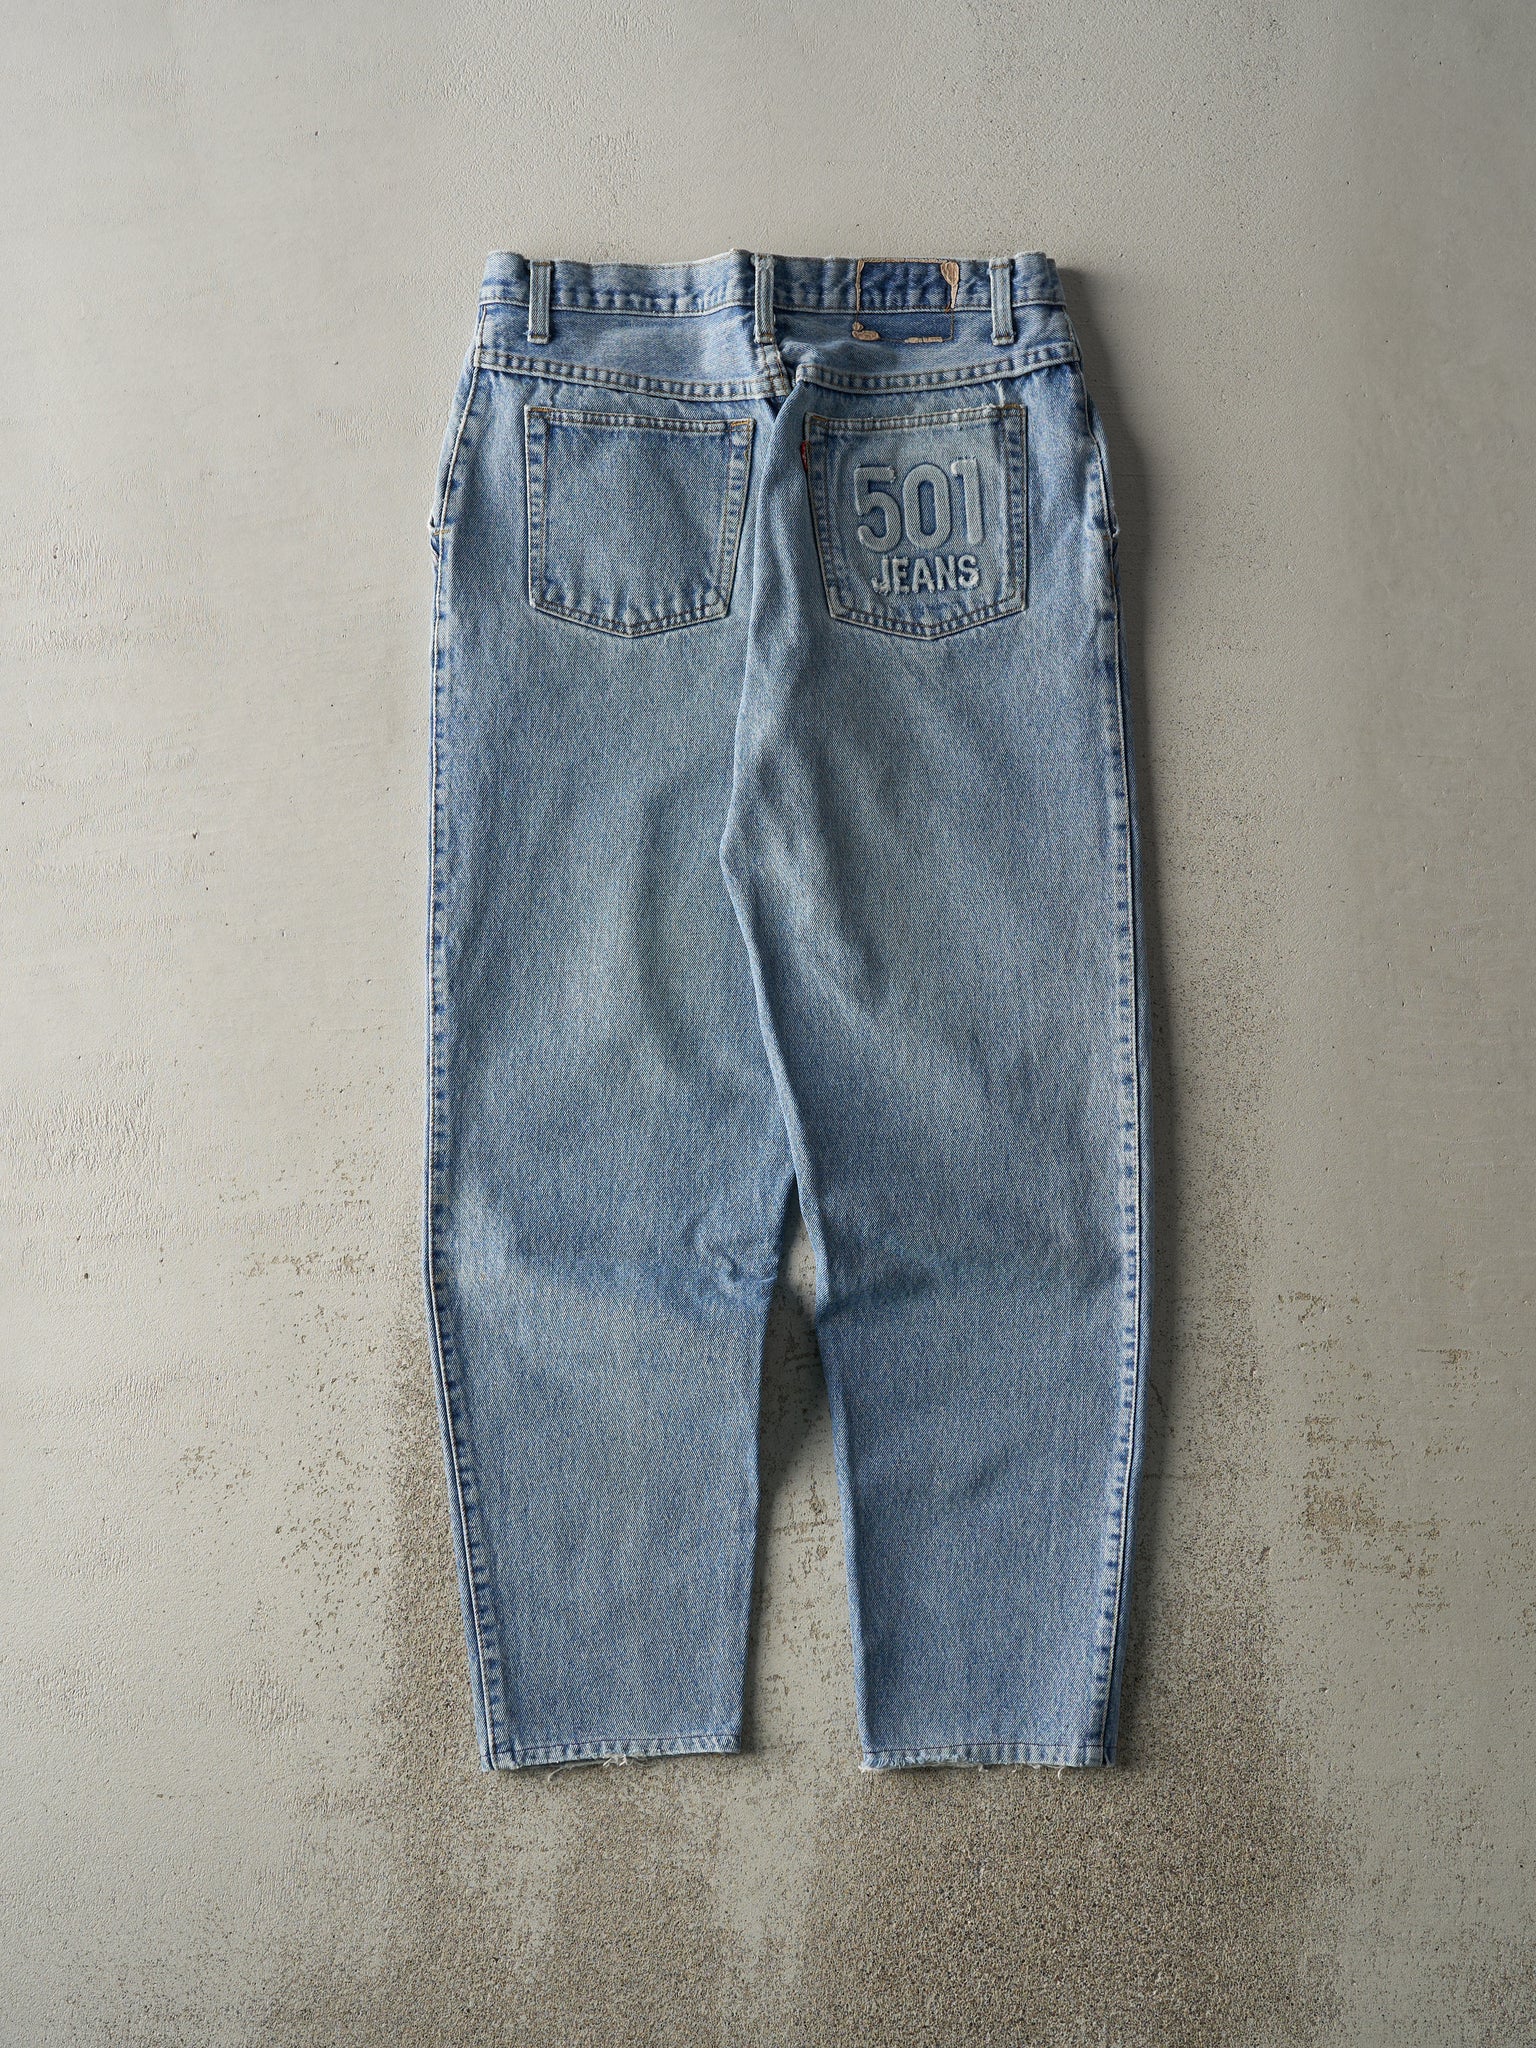 Vintage 90s Light Wash Levi's 501 Embossed Jeans (32x29)